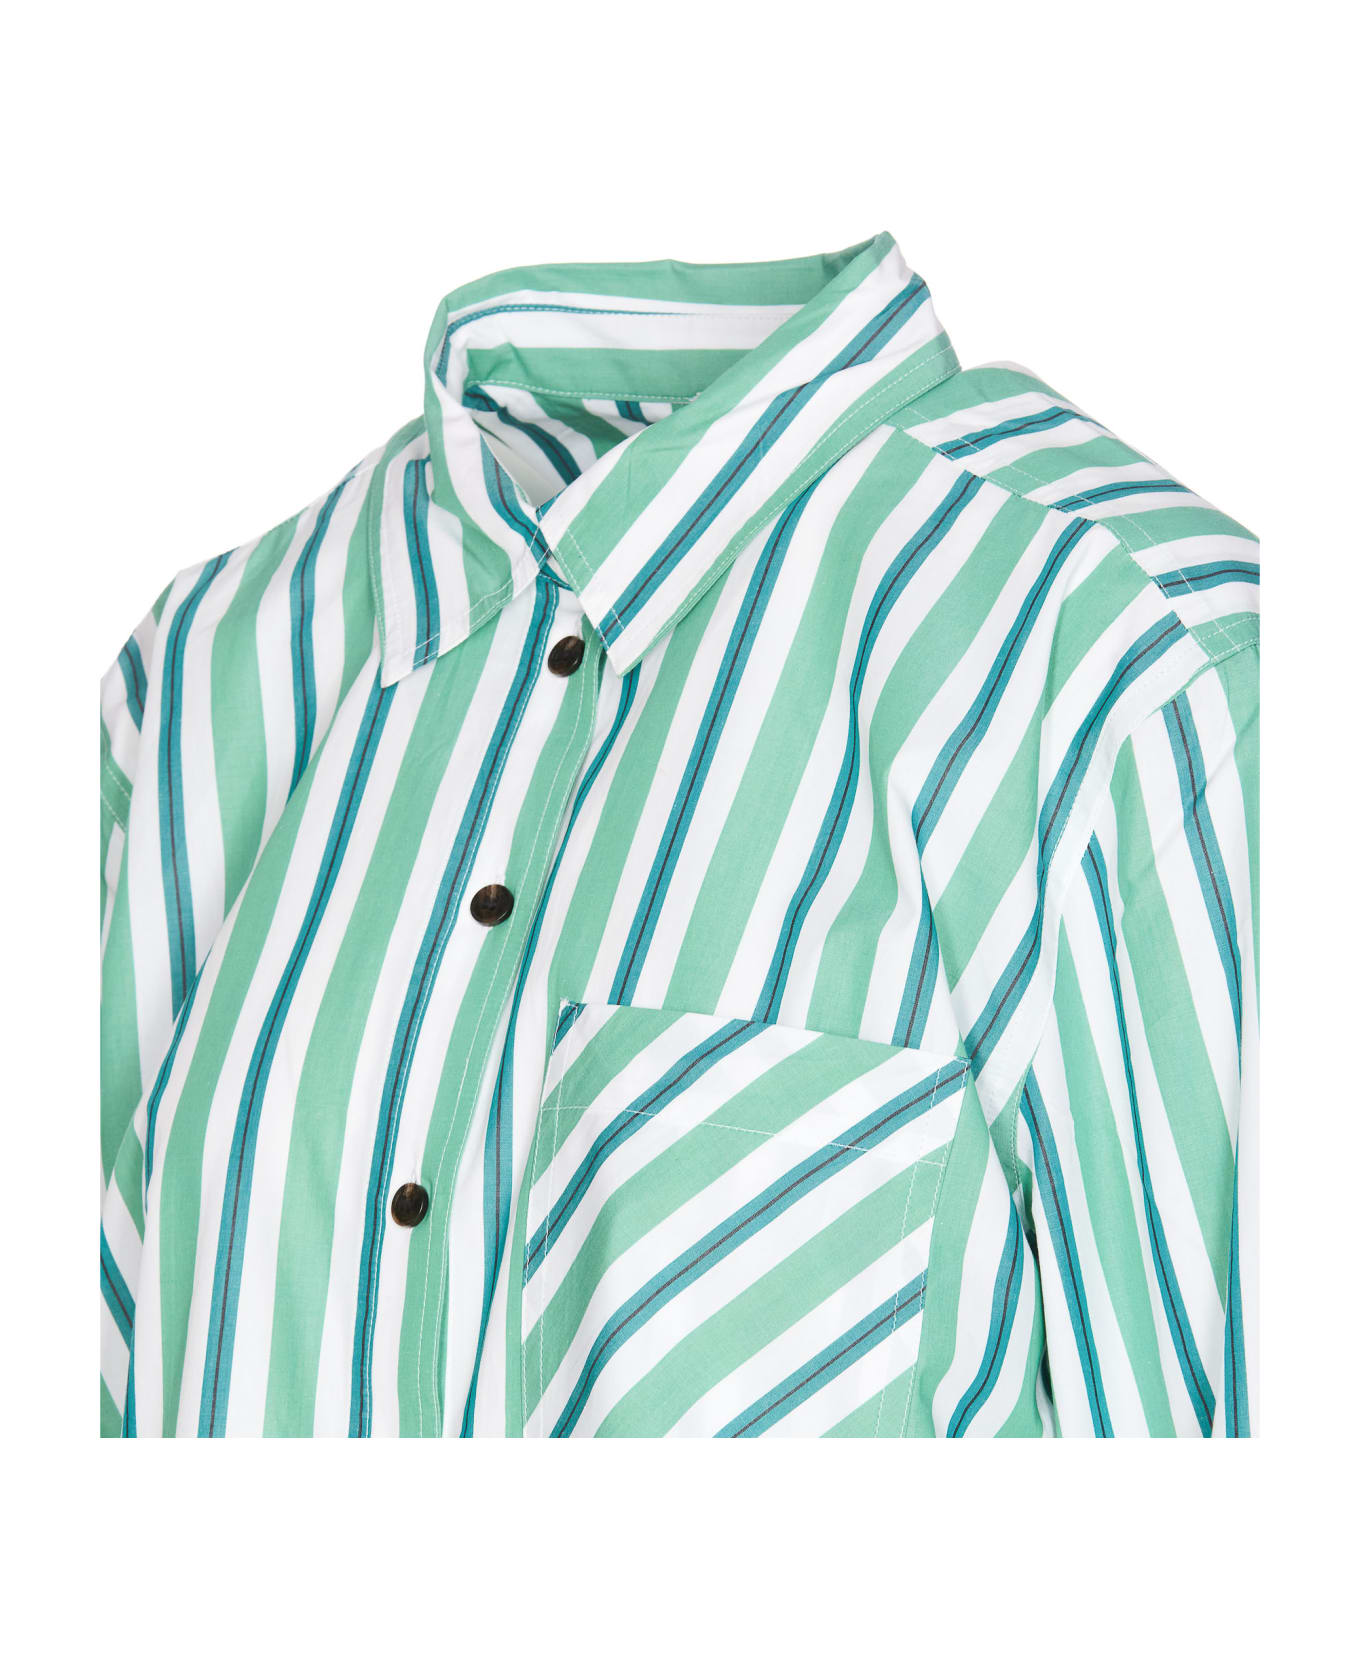 Ganni Striped Shirt - Green